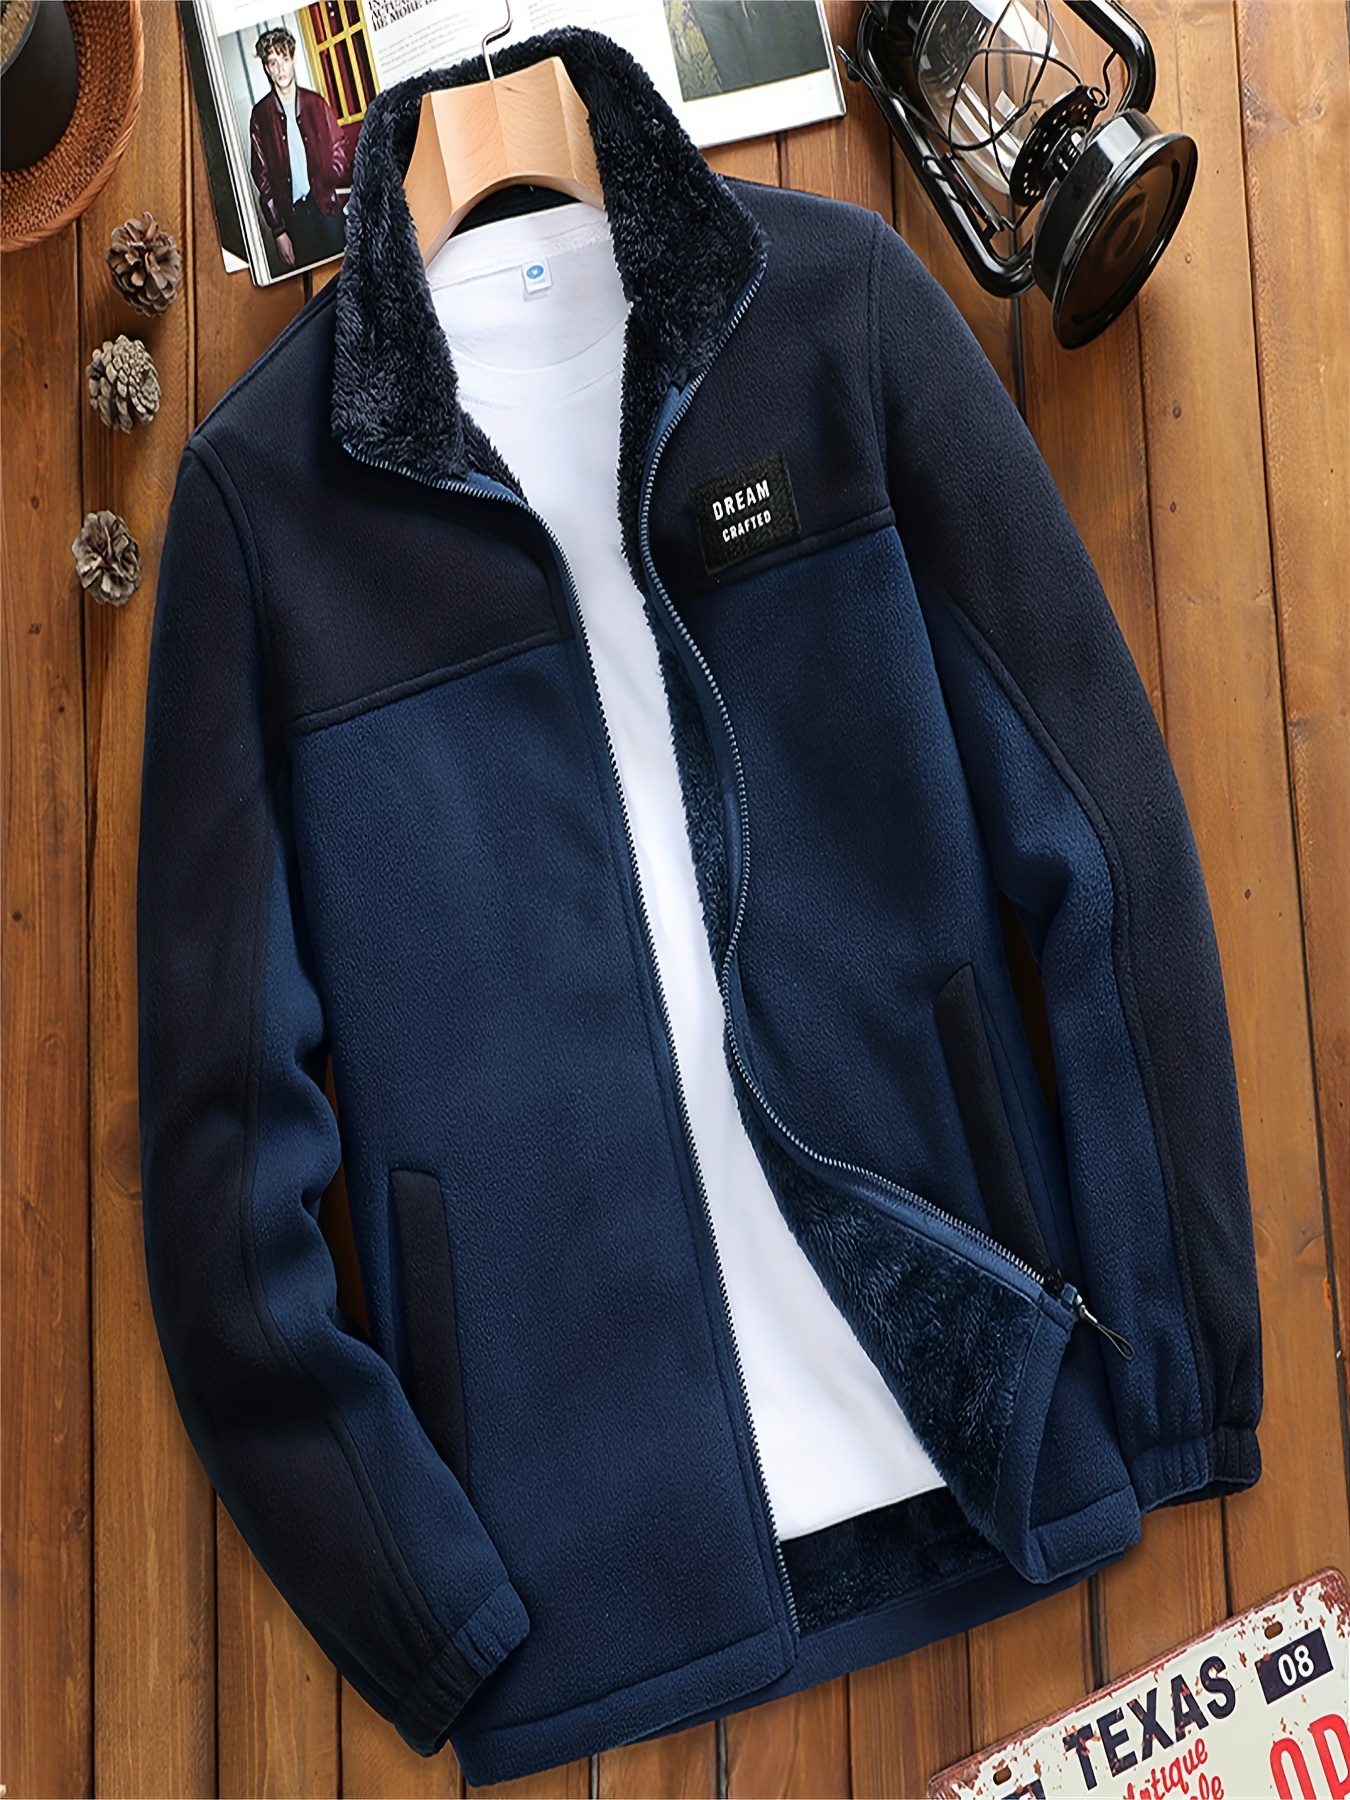 Engel Men Jacket, Merino Wool Fleece – Warmth and Weather